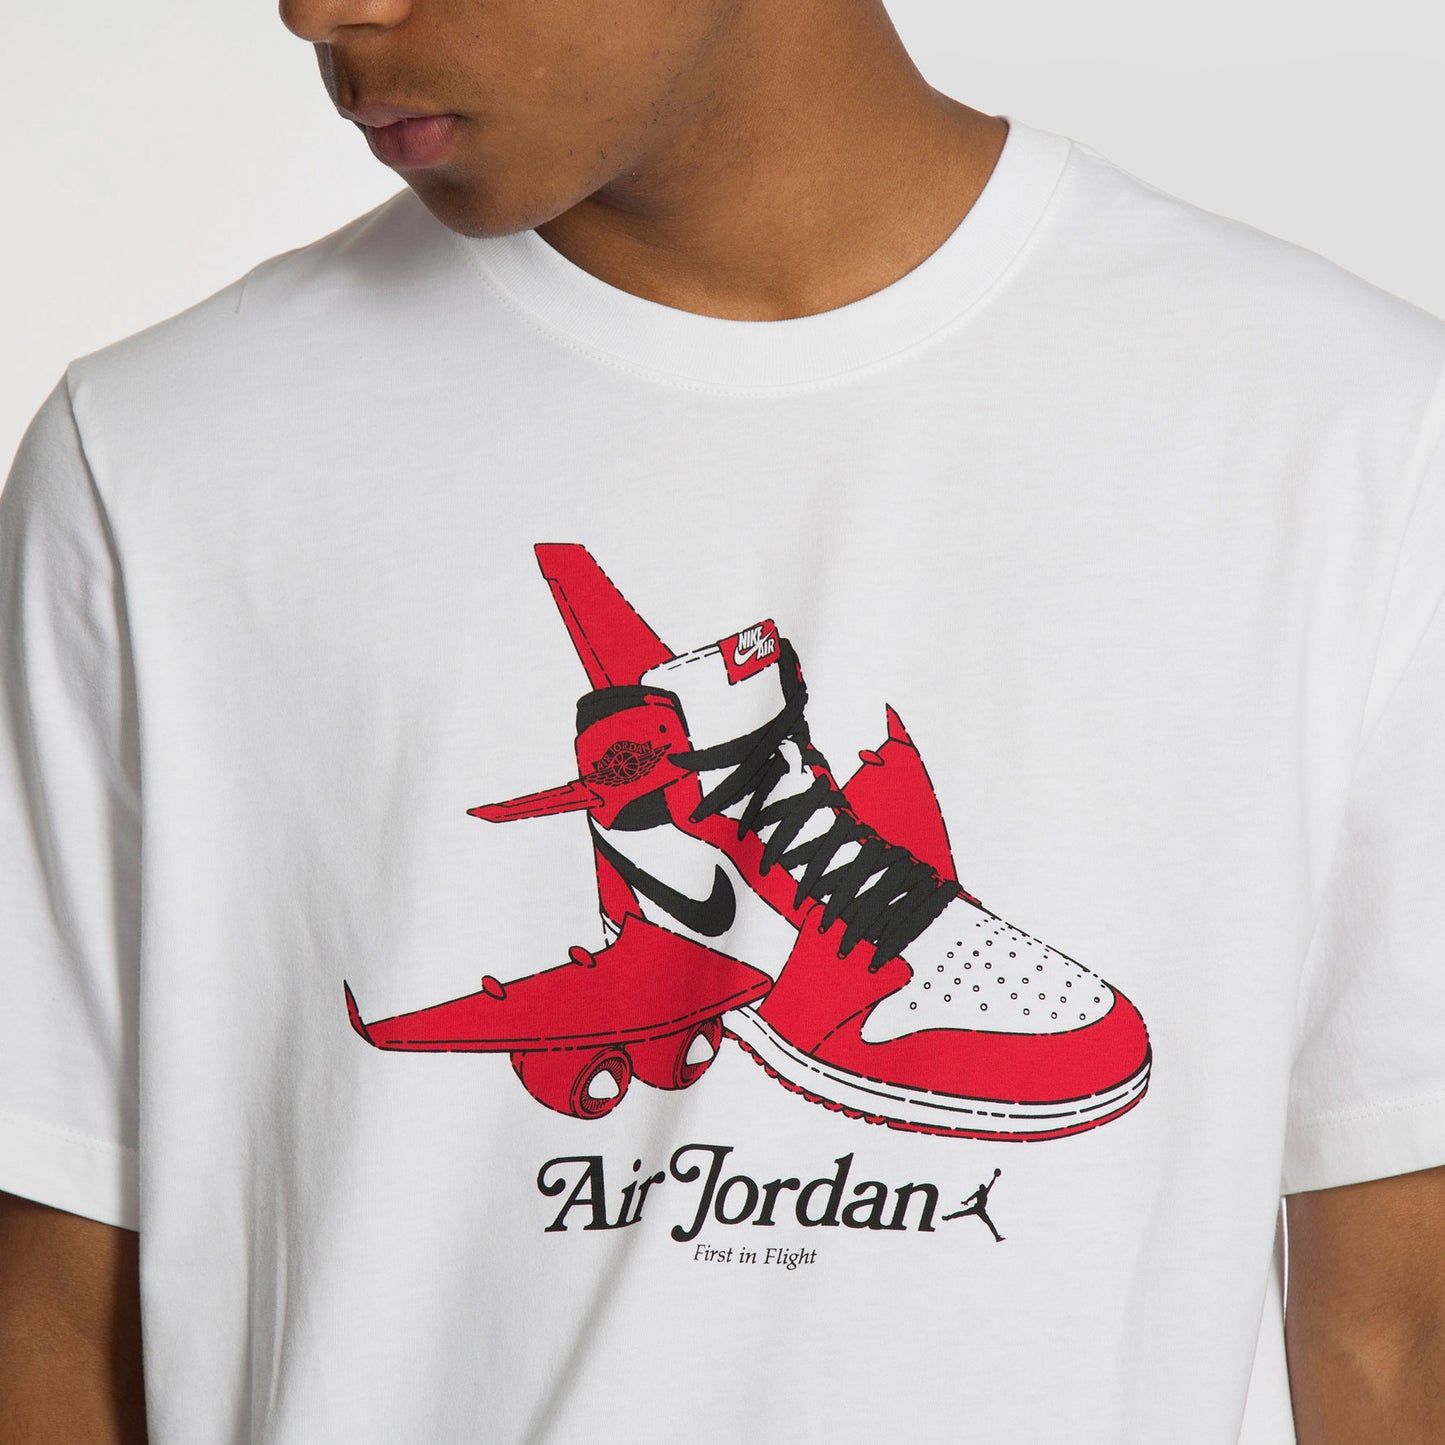 Jordan Camiseta Jordan Brand - CN3596-100 - Colección Chico